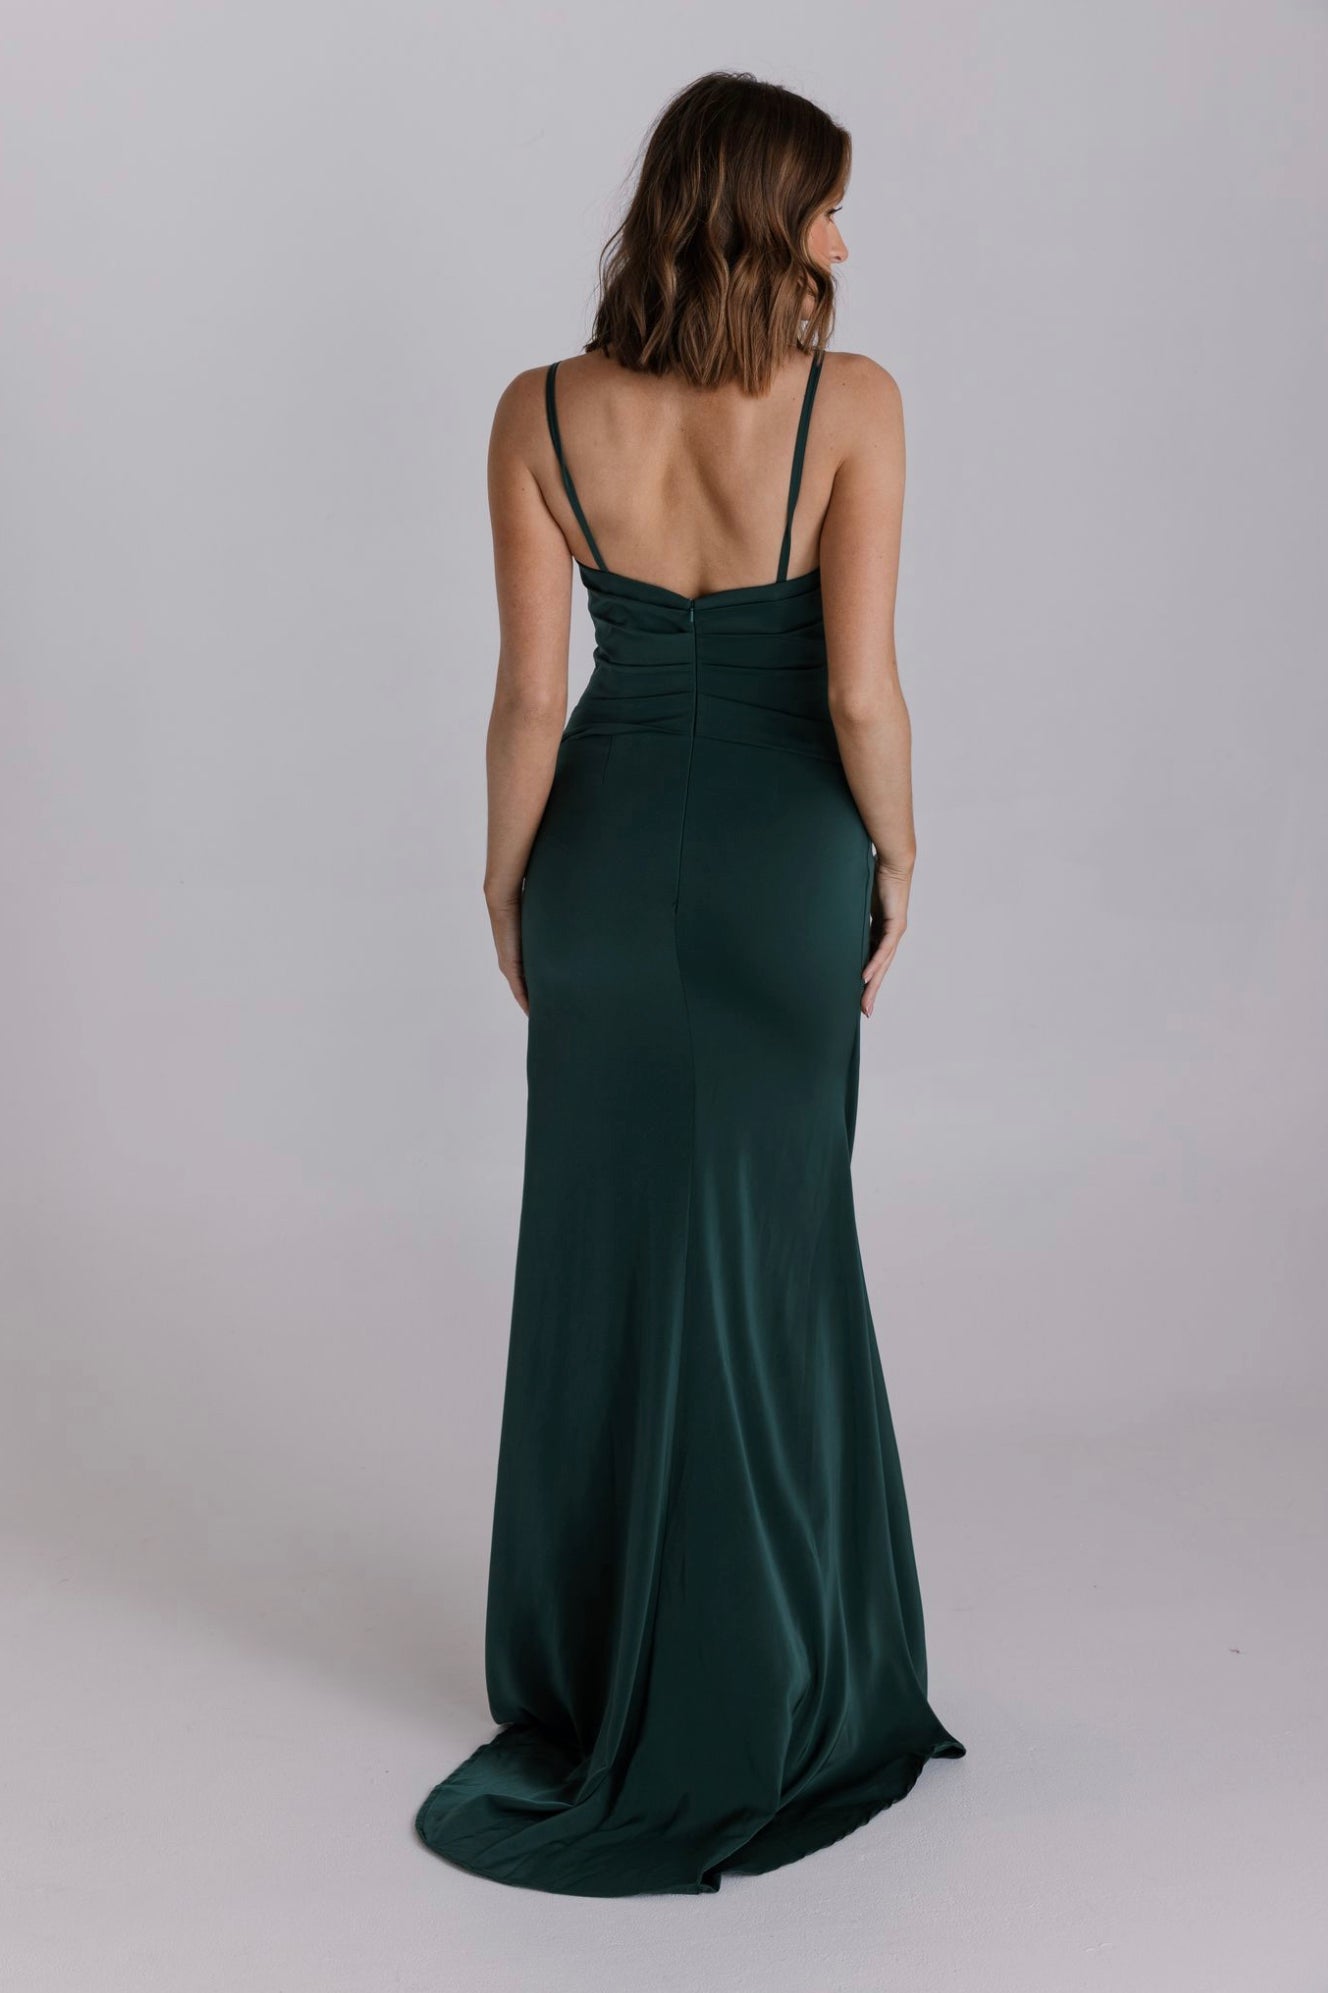 Wren PO996 by Tania Olsen Boysenberry & Emerald Formal Dress